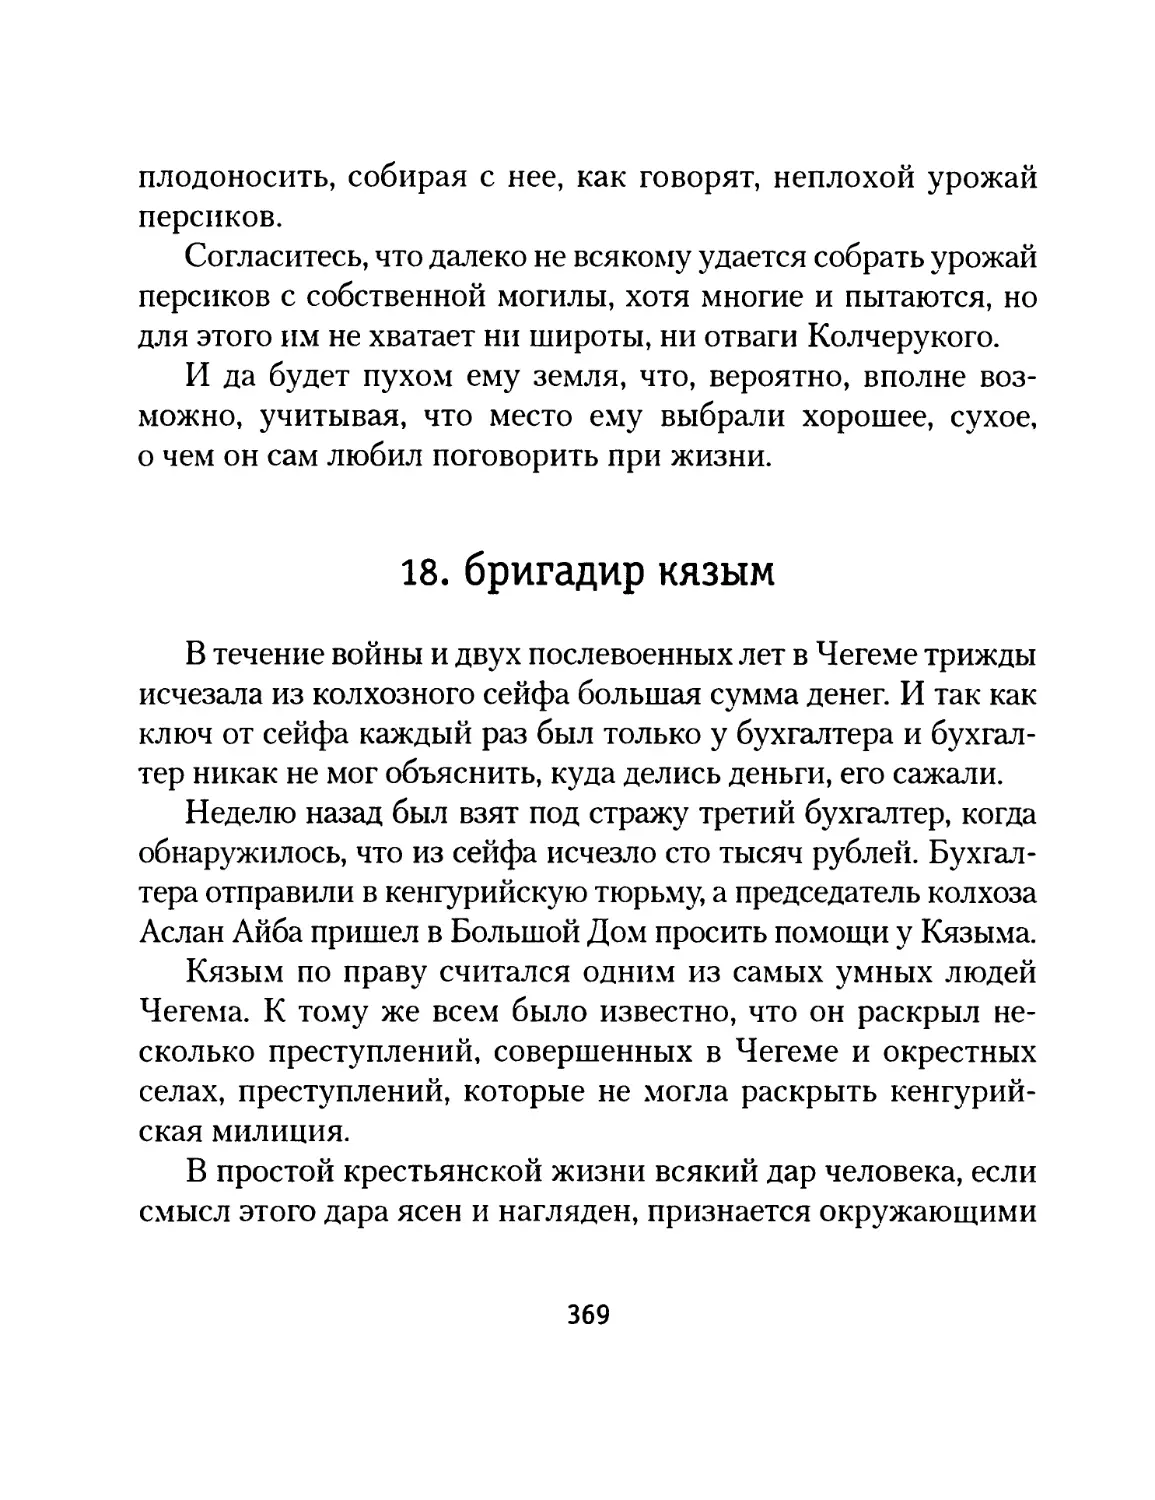 Глава 18. Бригадир Кязым